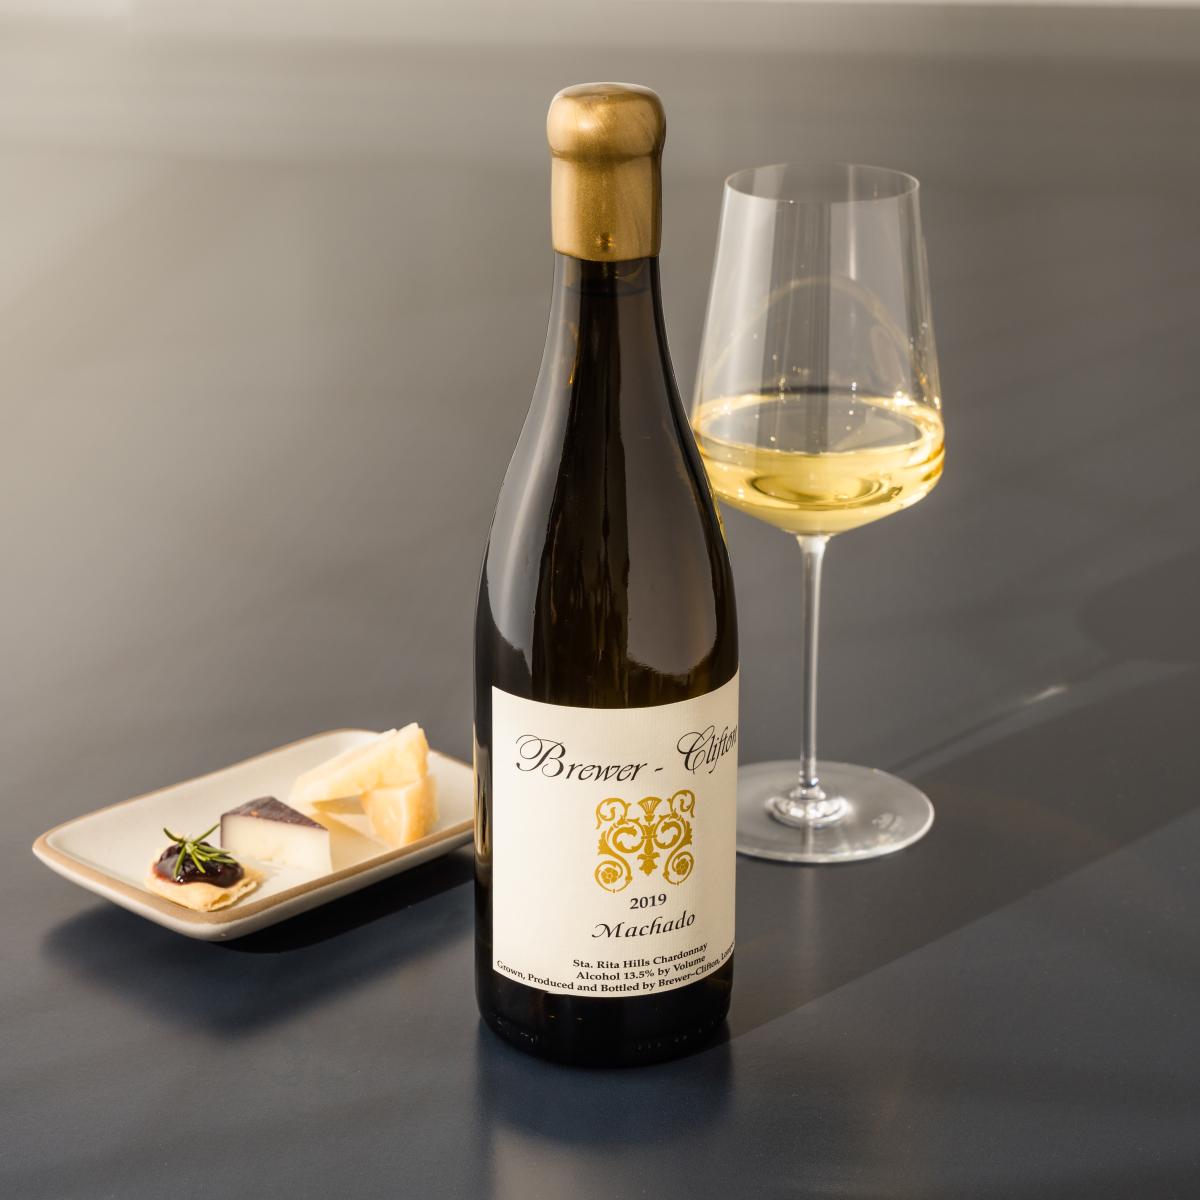 2019 Machado Chardonnay with wine glass and cheese 